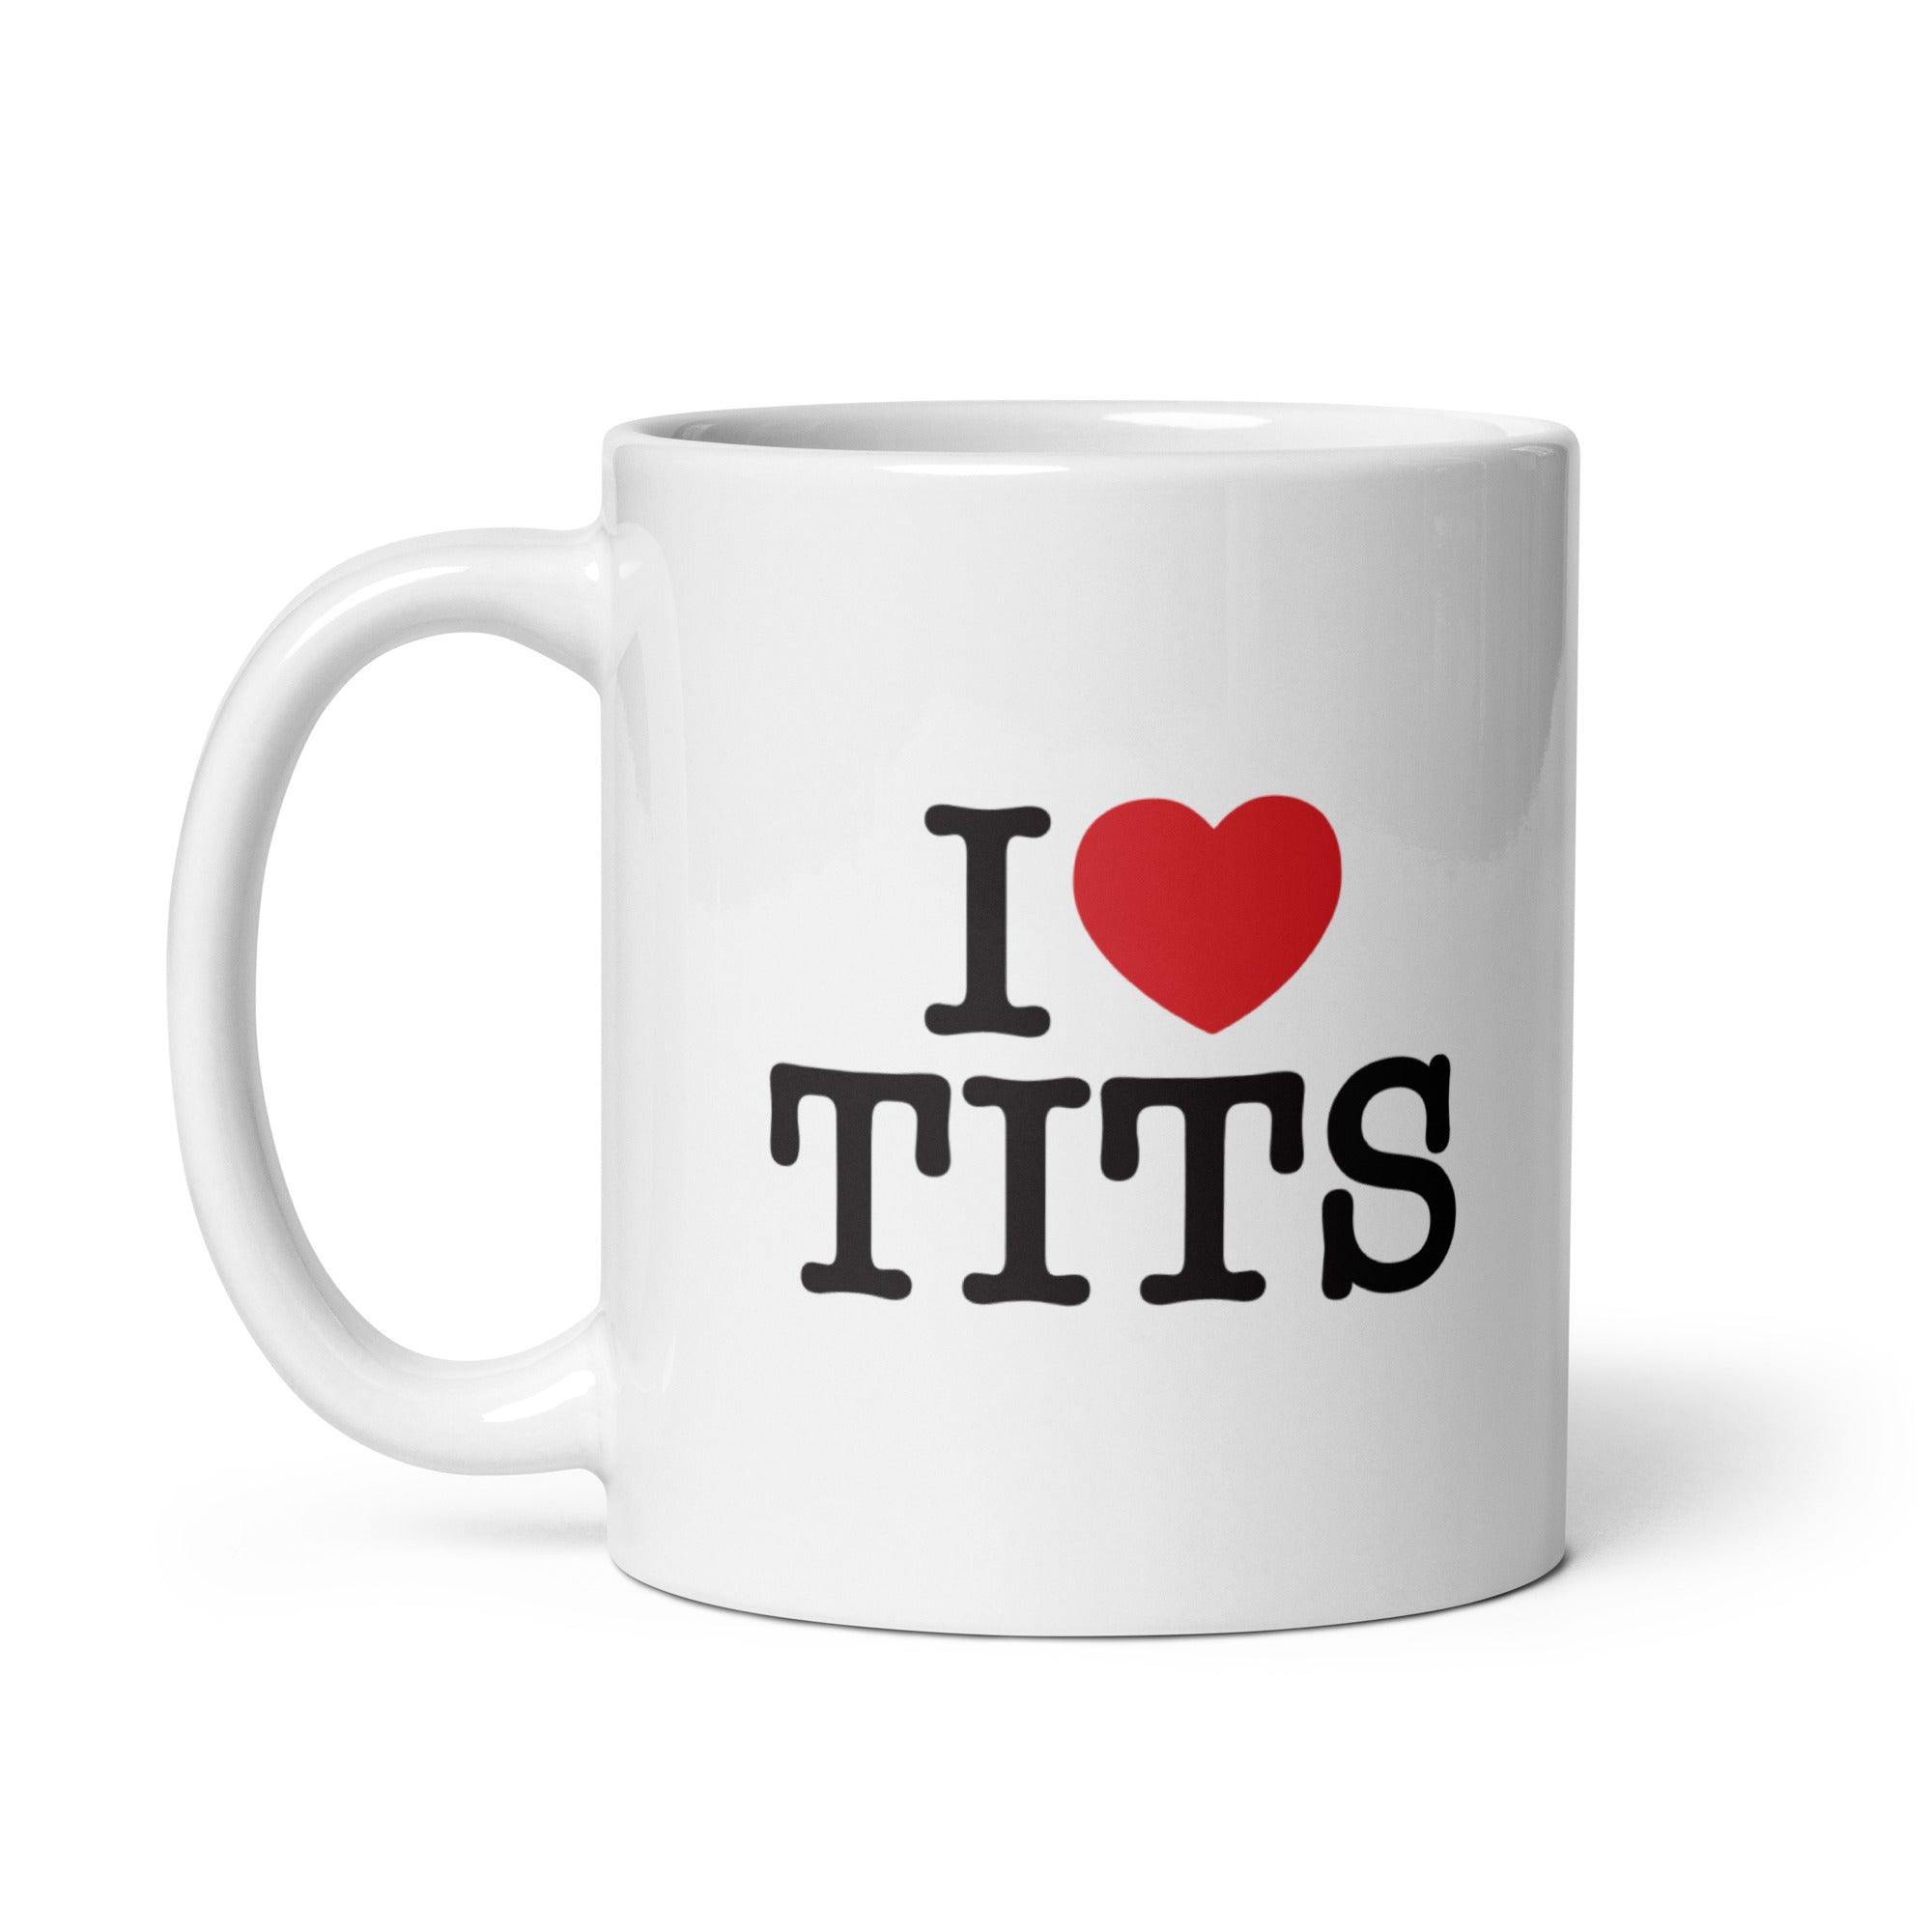 I Love Tits Mug